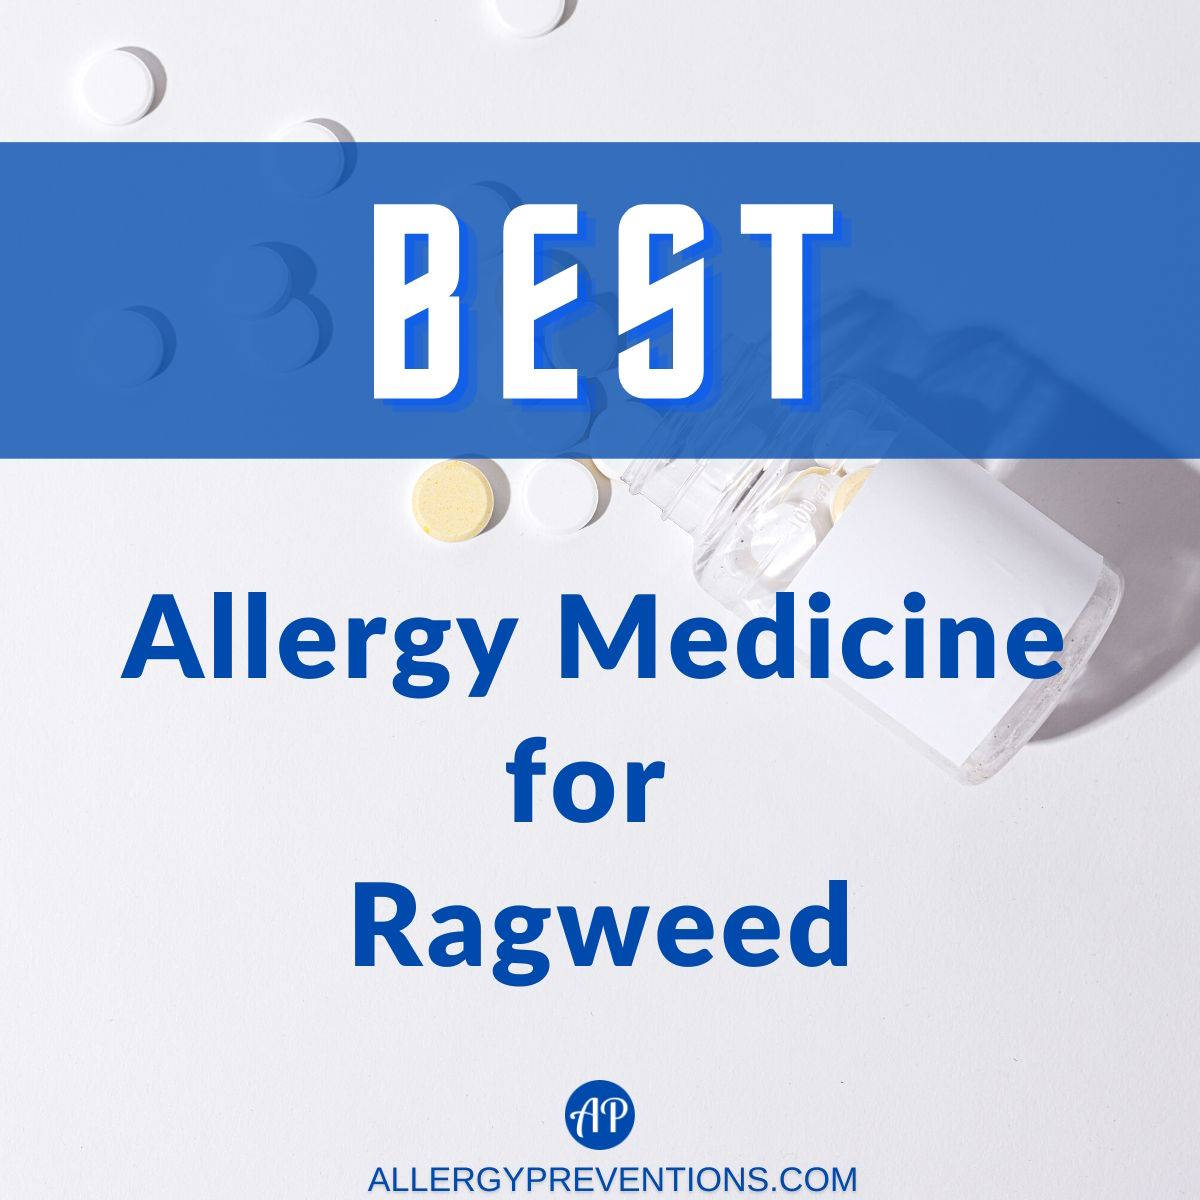 Best Allergy Medicine for Ragweed